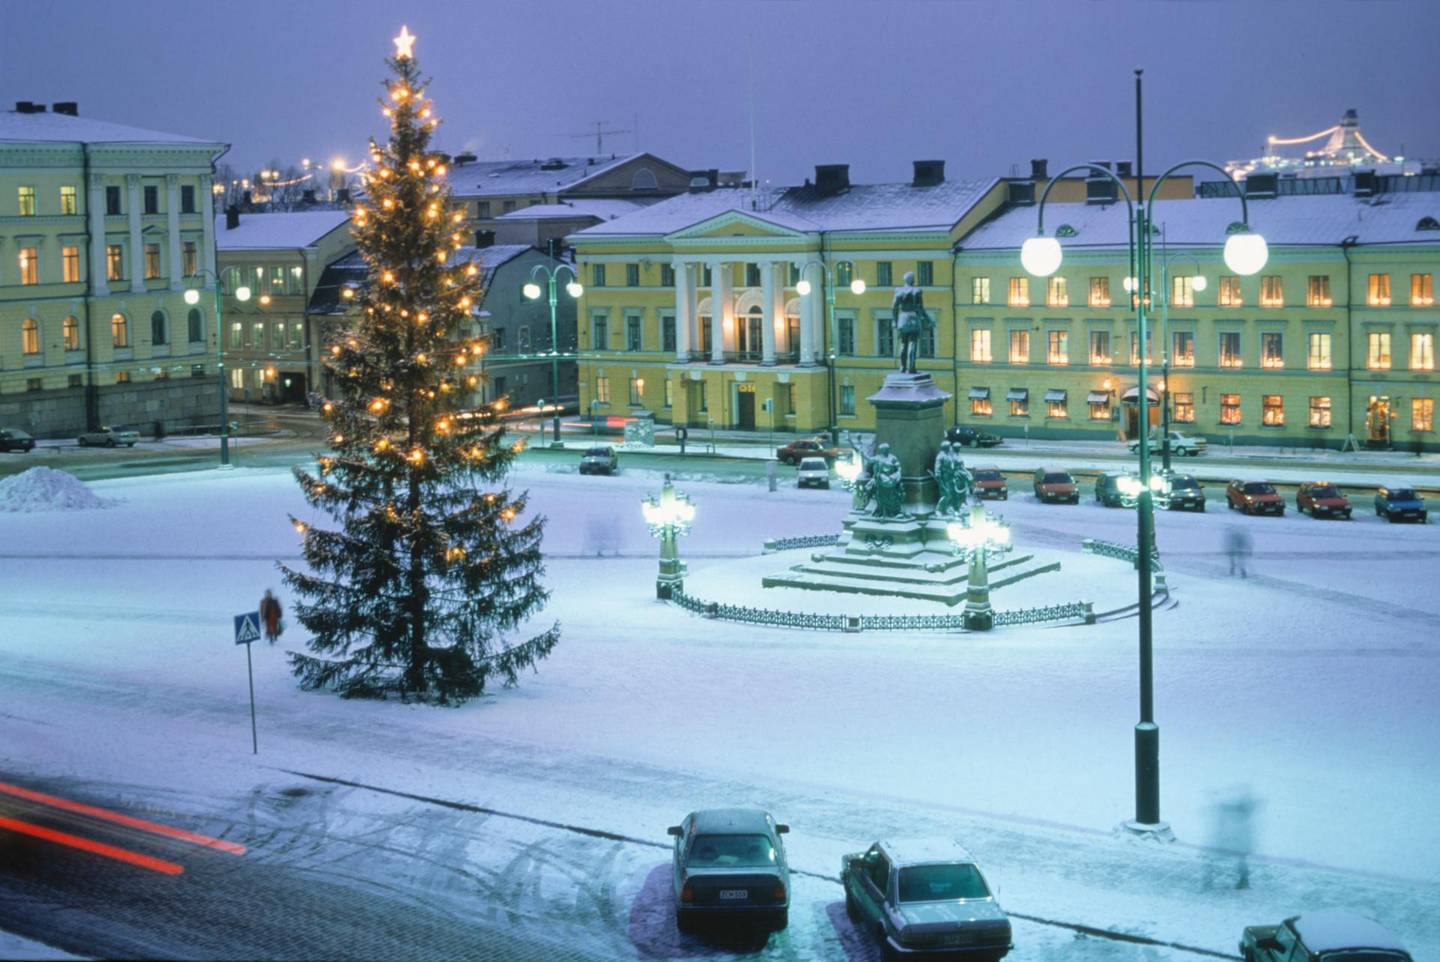 Senate Square in Helsinki. Finland. Courtesy Visit Finland